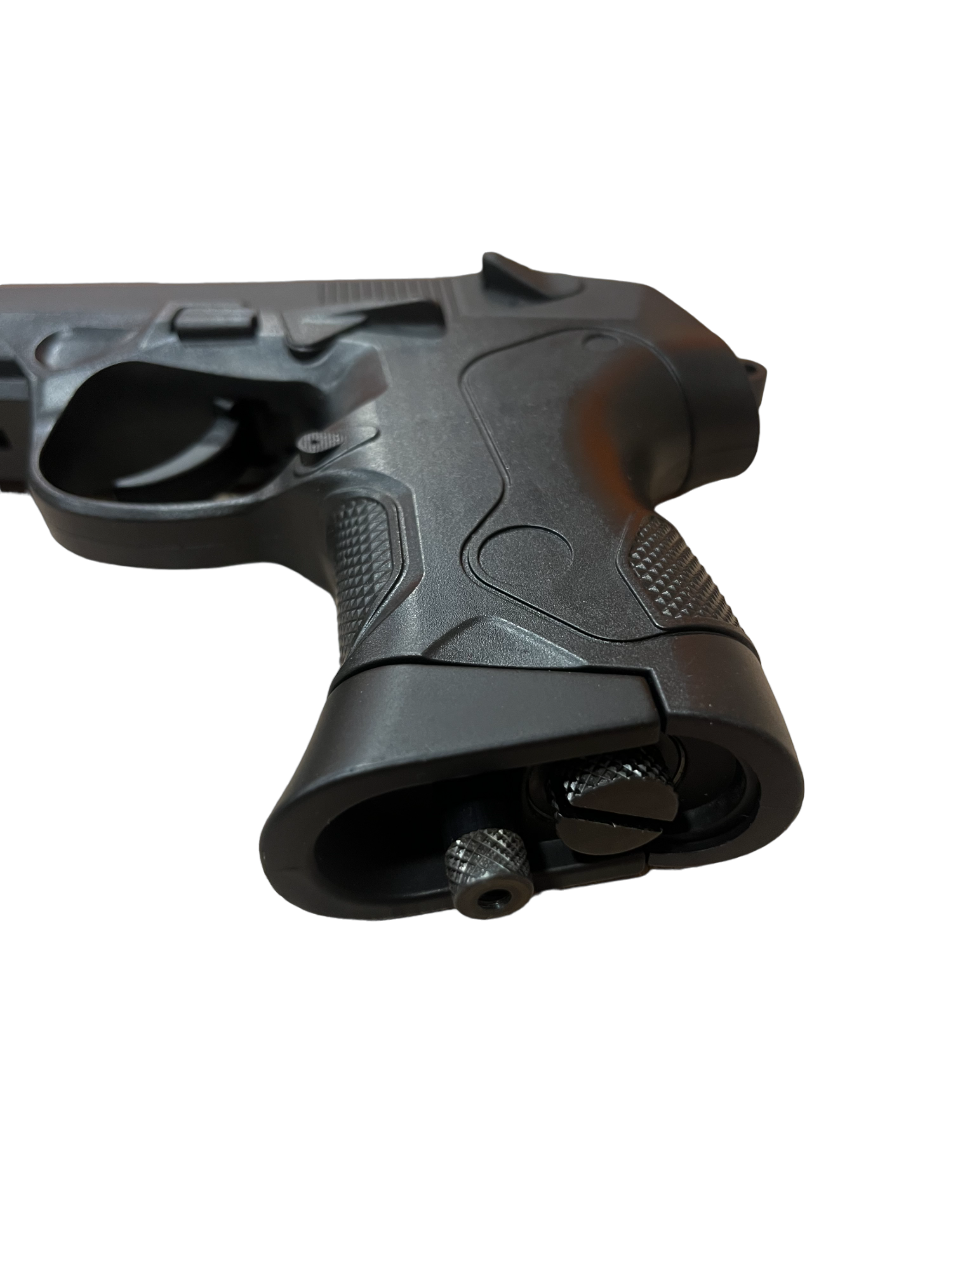 Hwasan Small PX4 Co2 Pistol (4.5mm-BK)